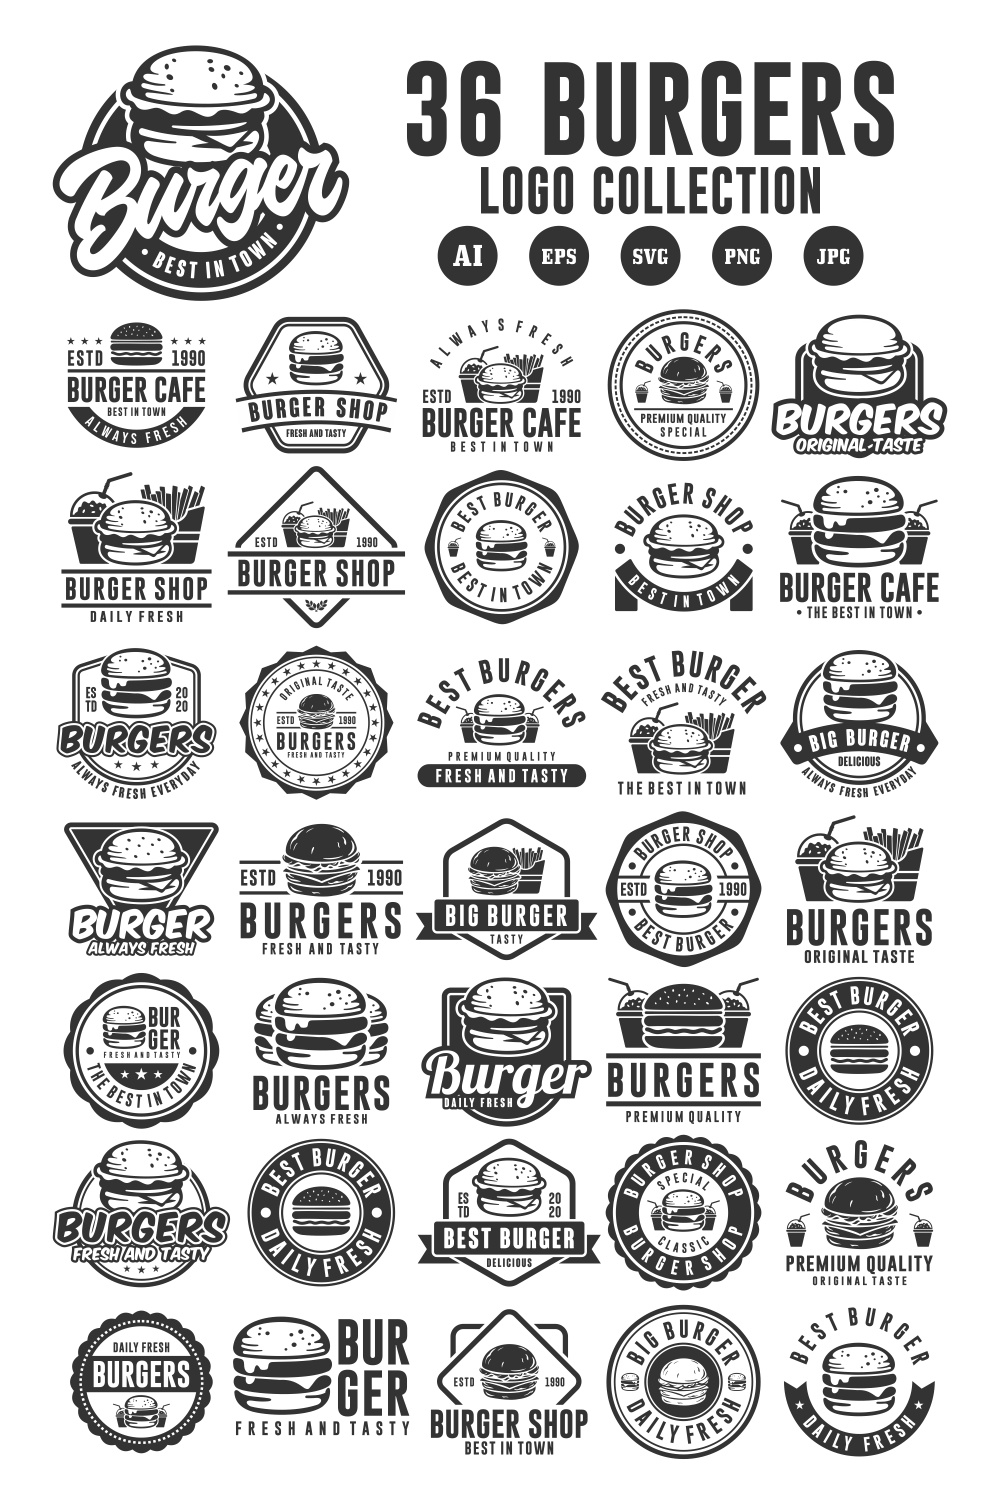 36 Burgers logo badge design collection pinterest preview image.